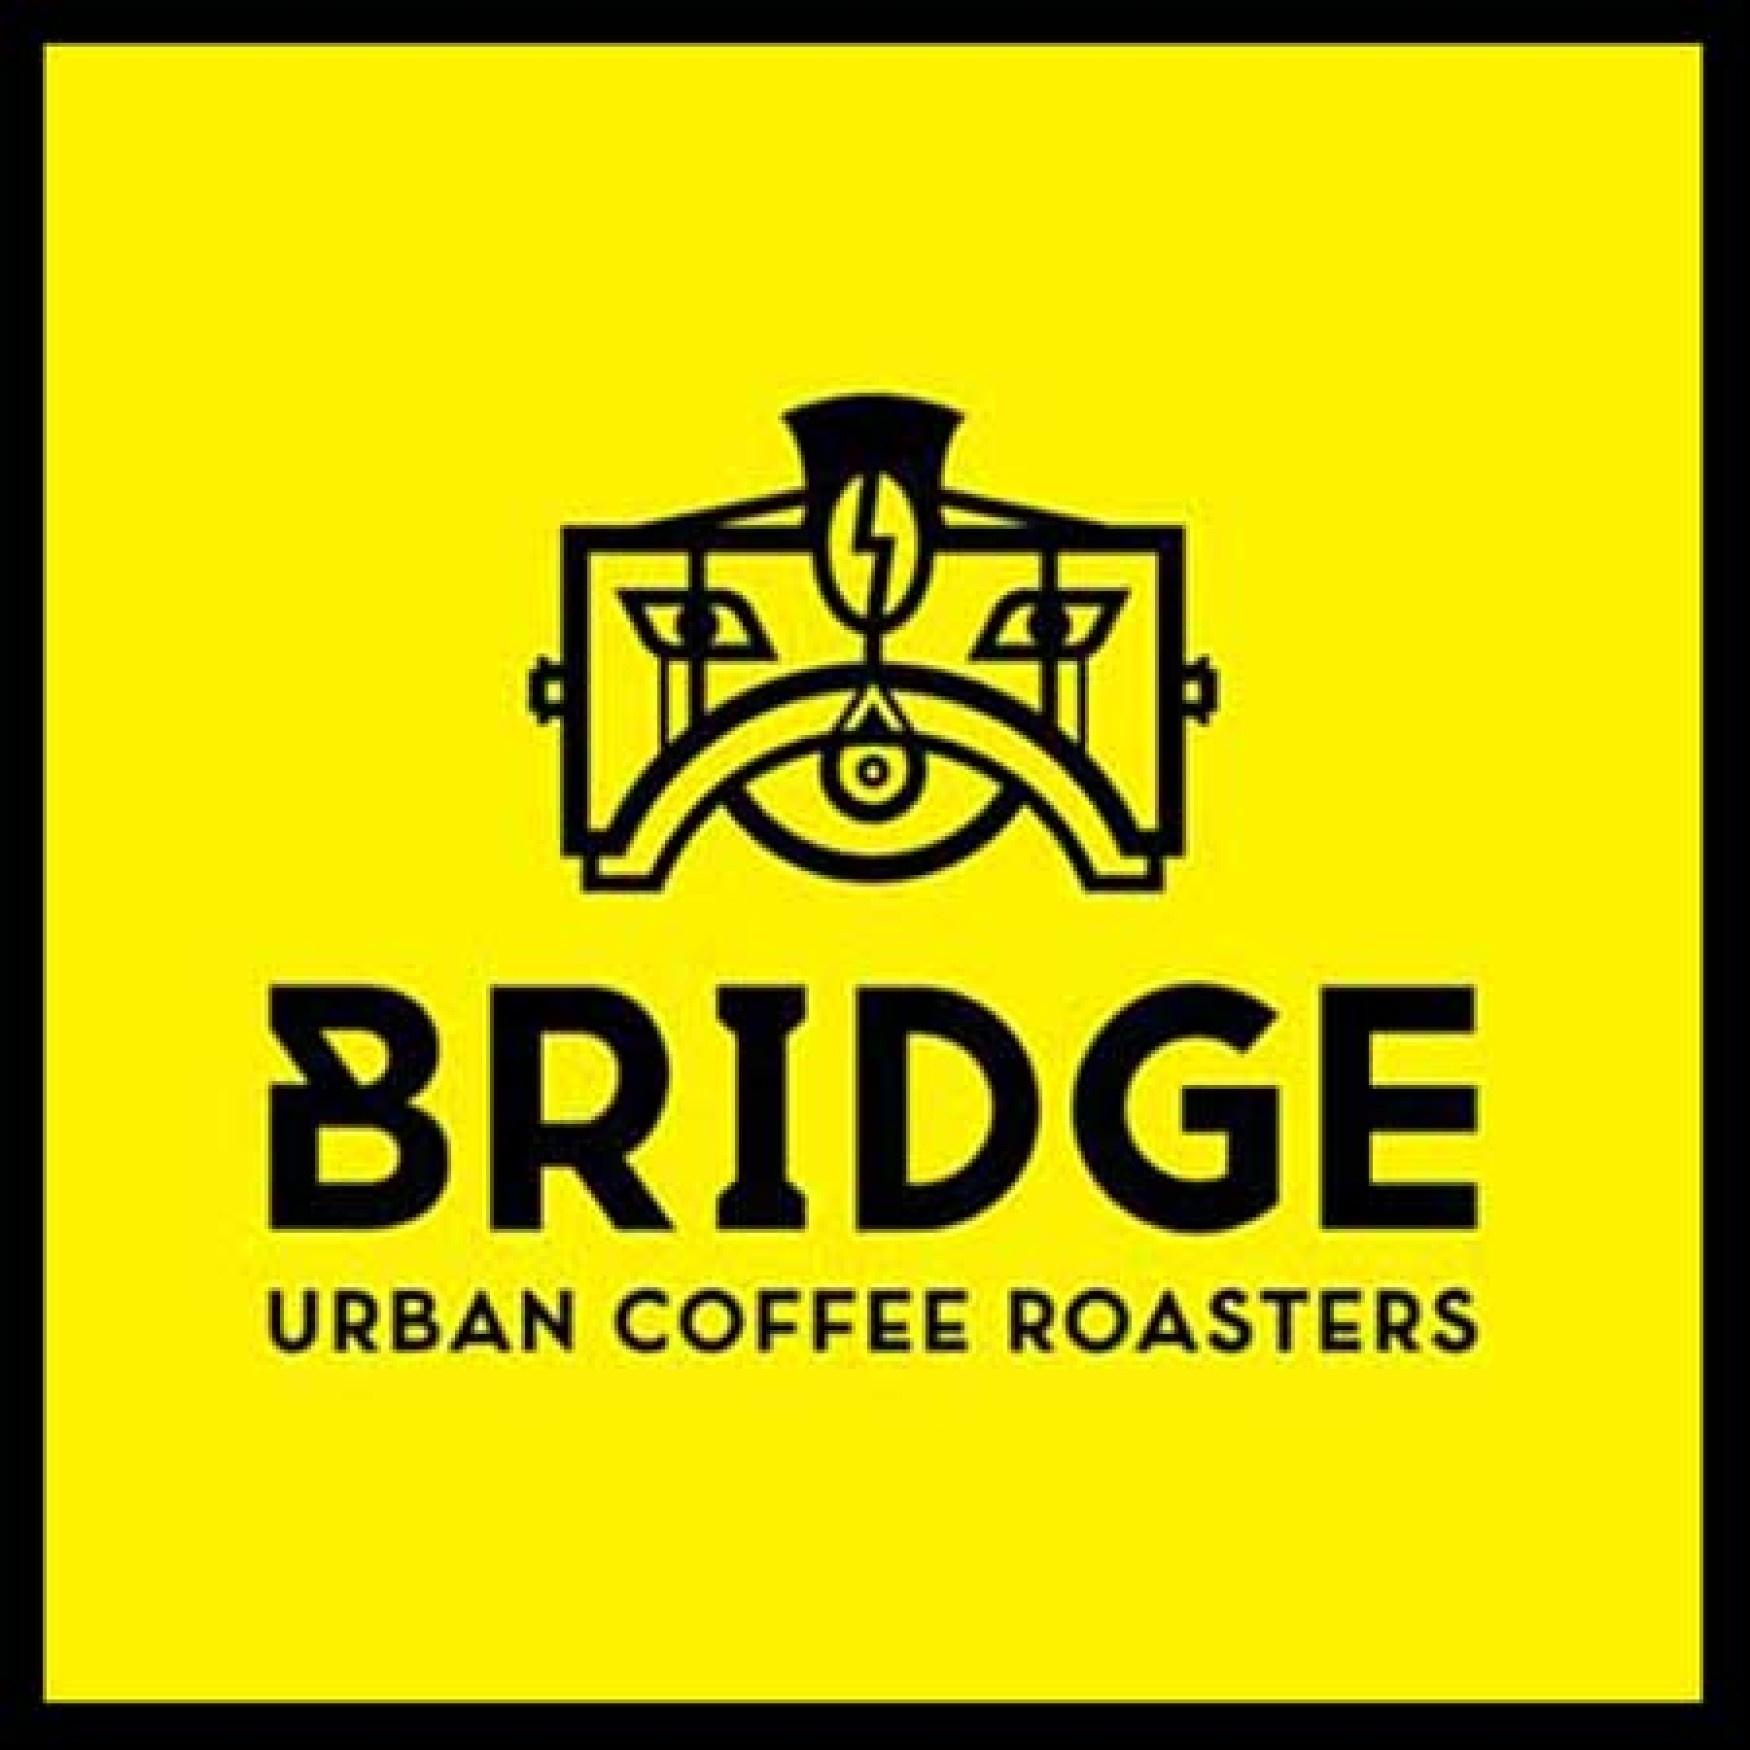 BRIDGE URBAN COFFEE ROASTERS